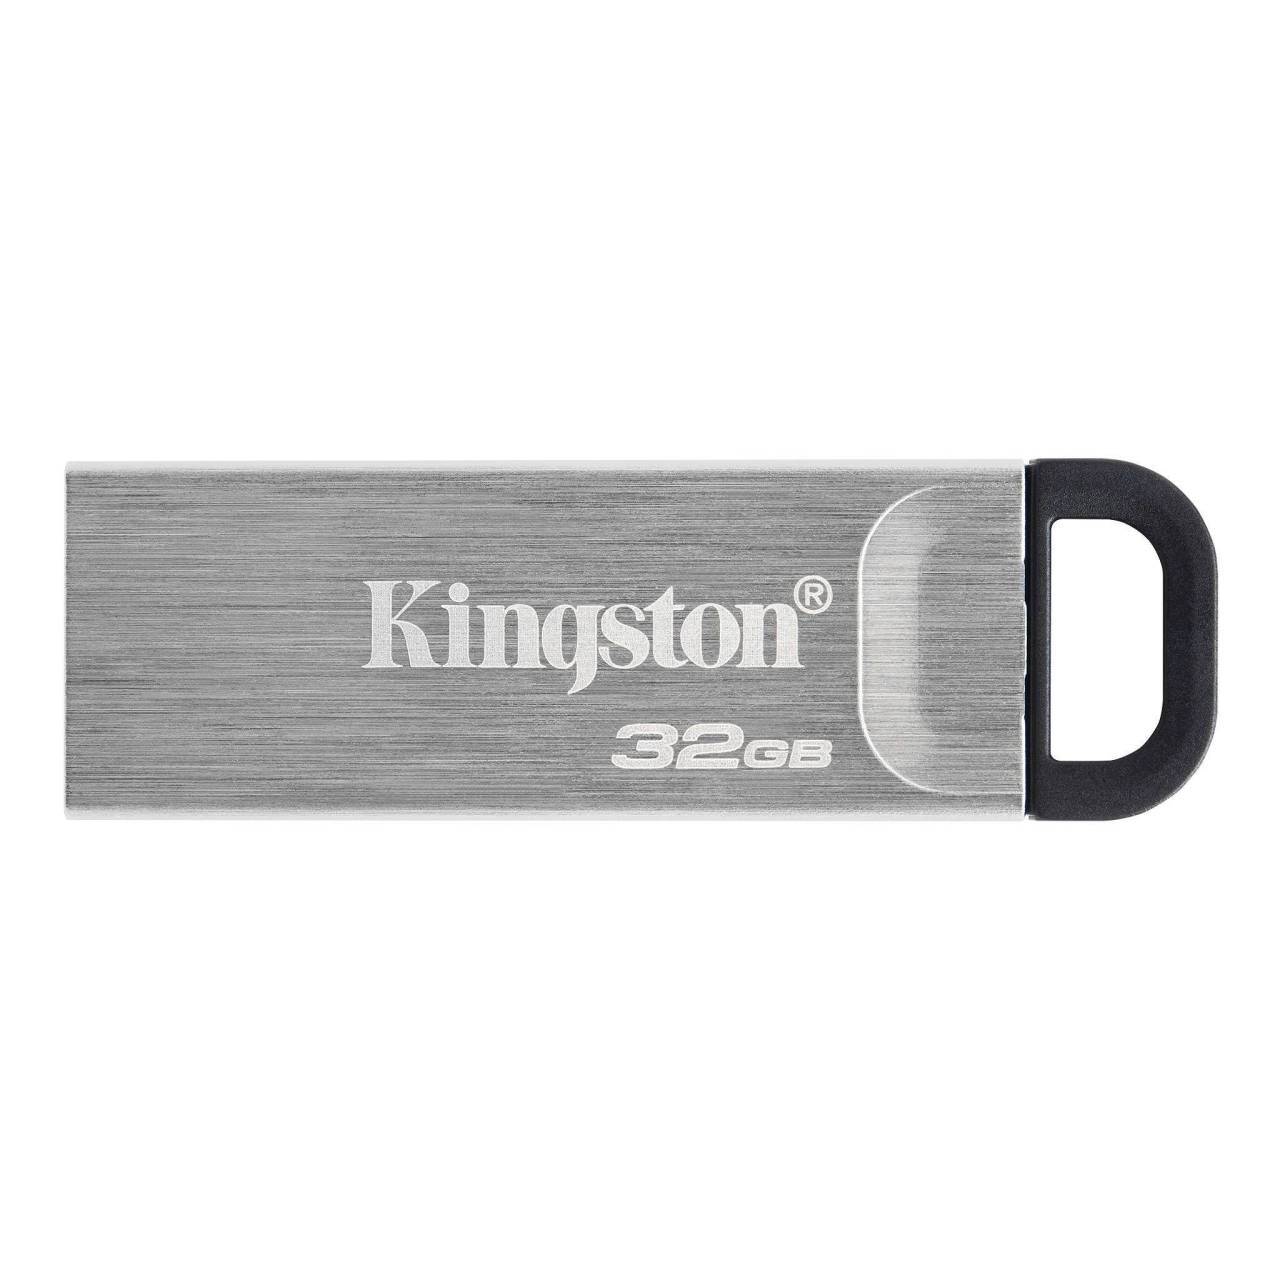 Speicherstick 32GB Kingston DTKN USB 3.0